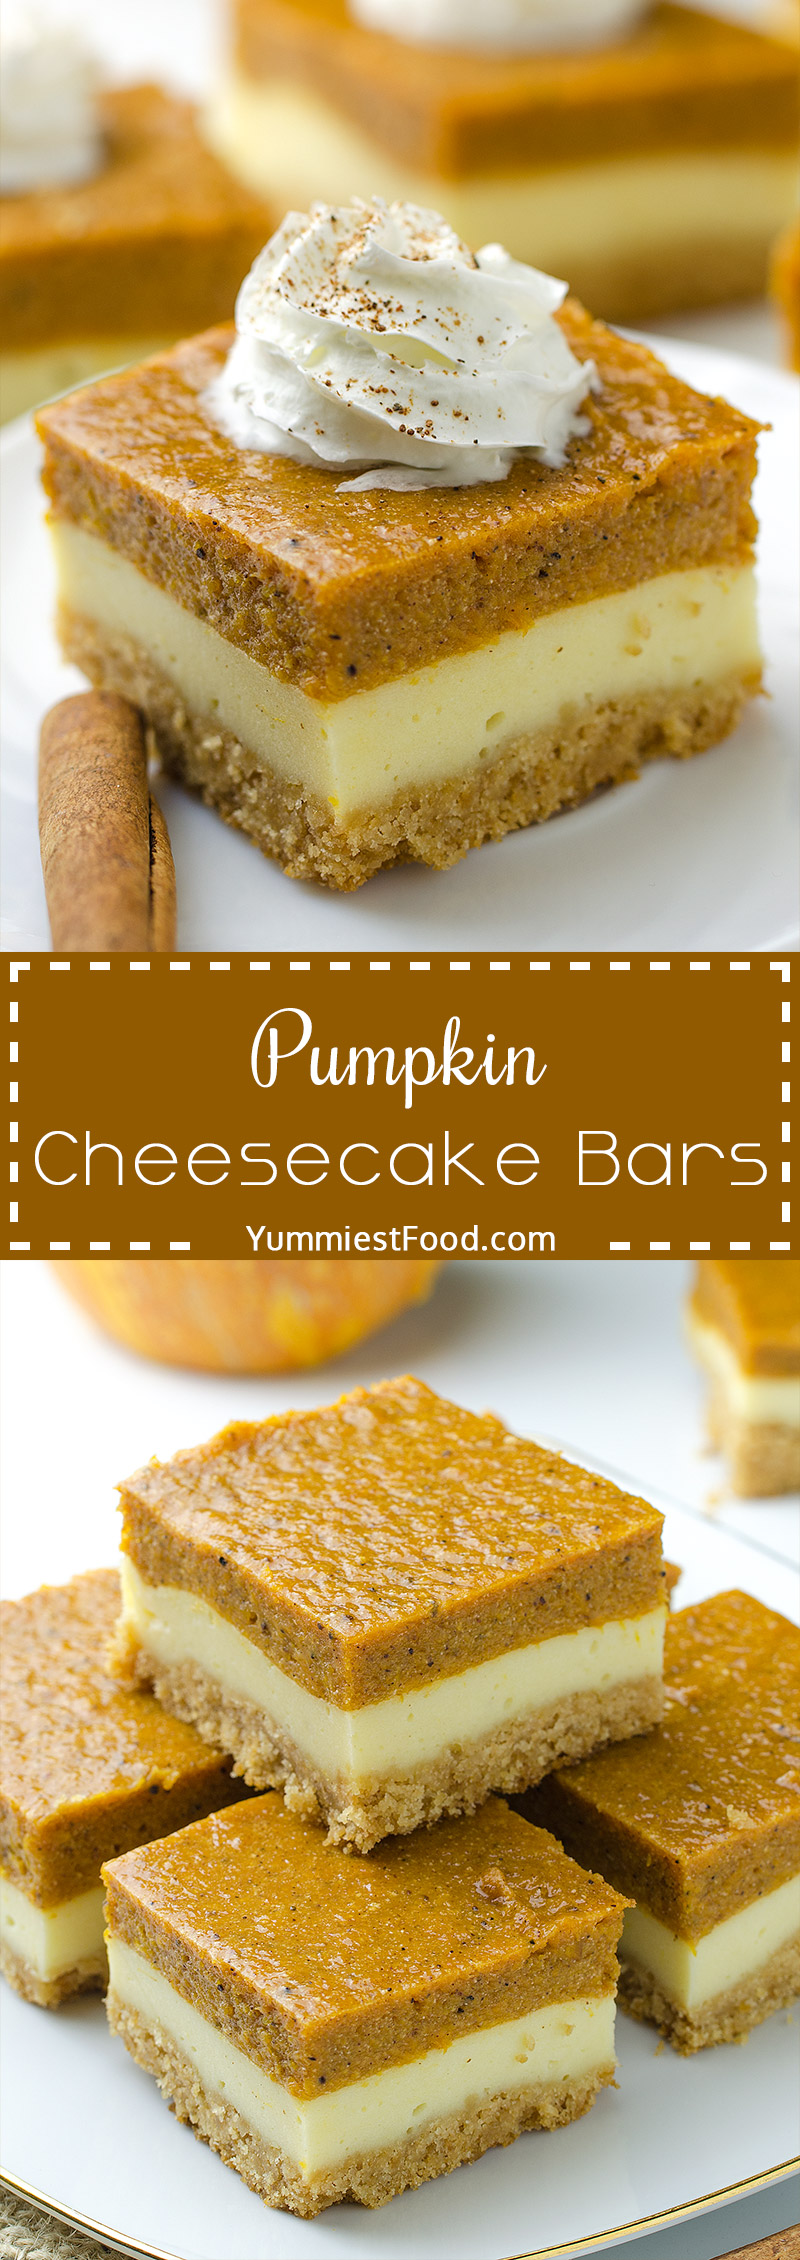 Pumpkin Cheesecake Bars - A super tasty sweet treat during the fall and holiday season